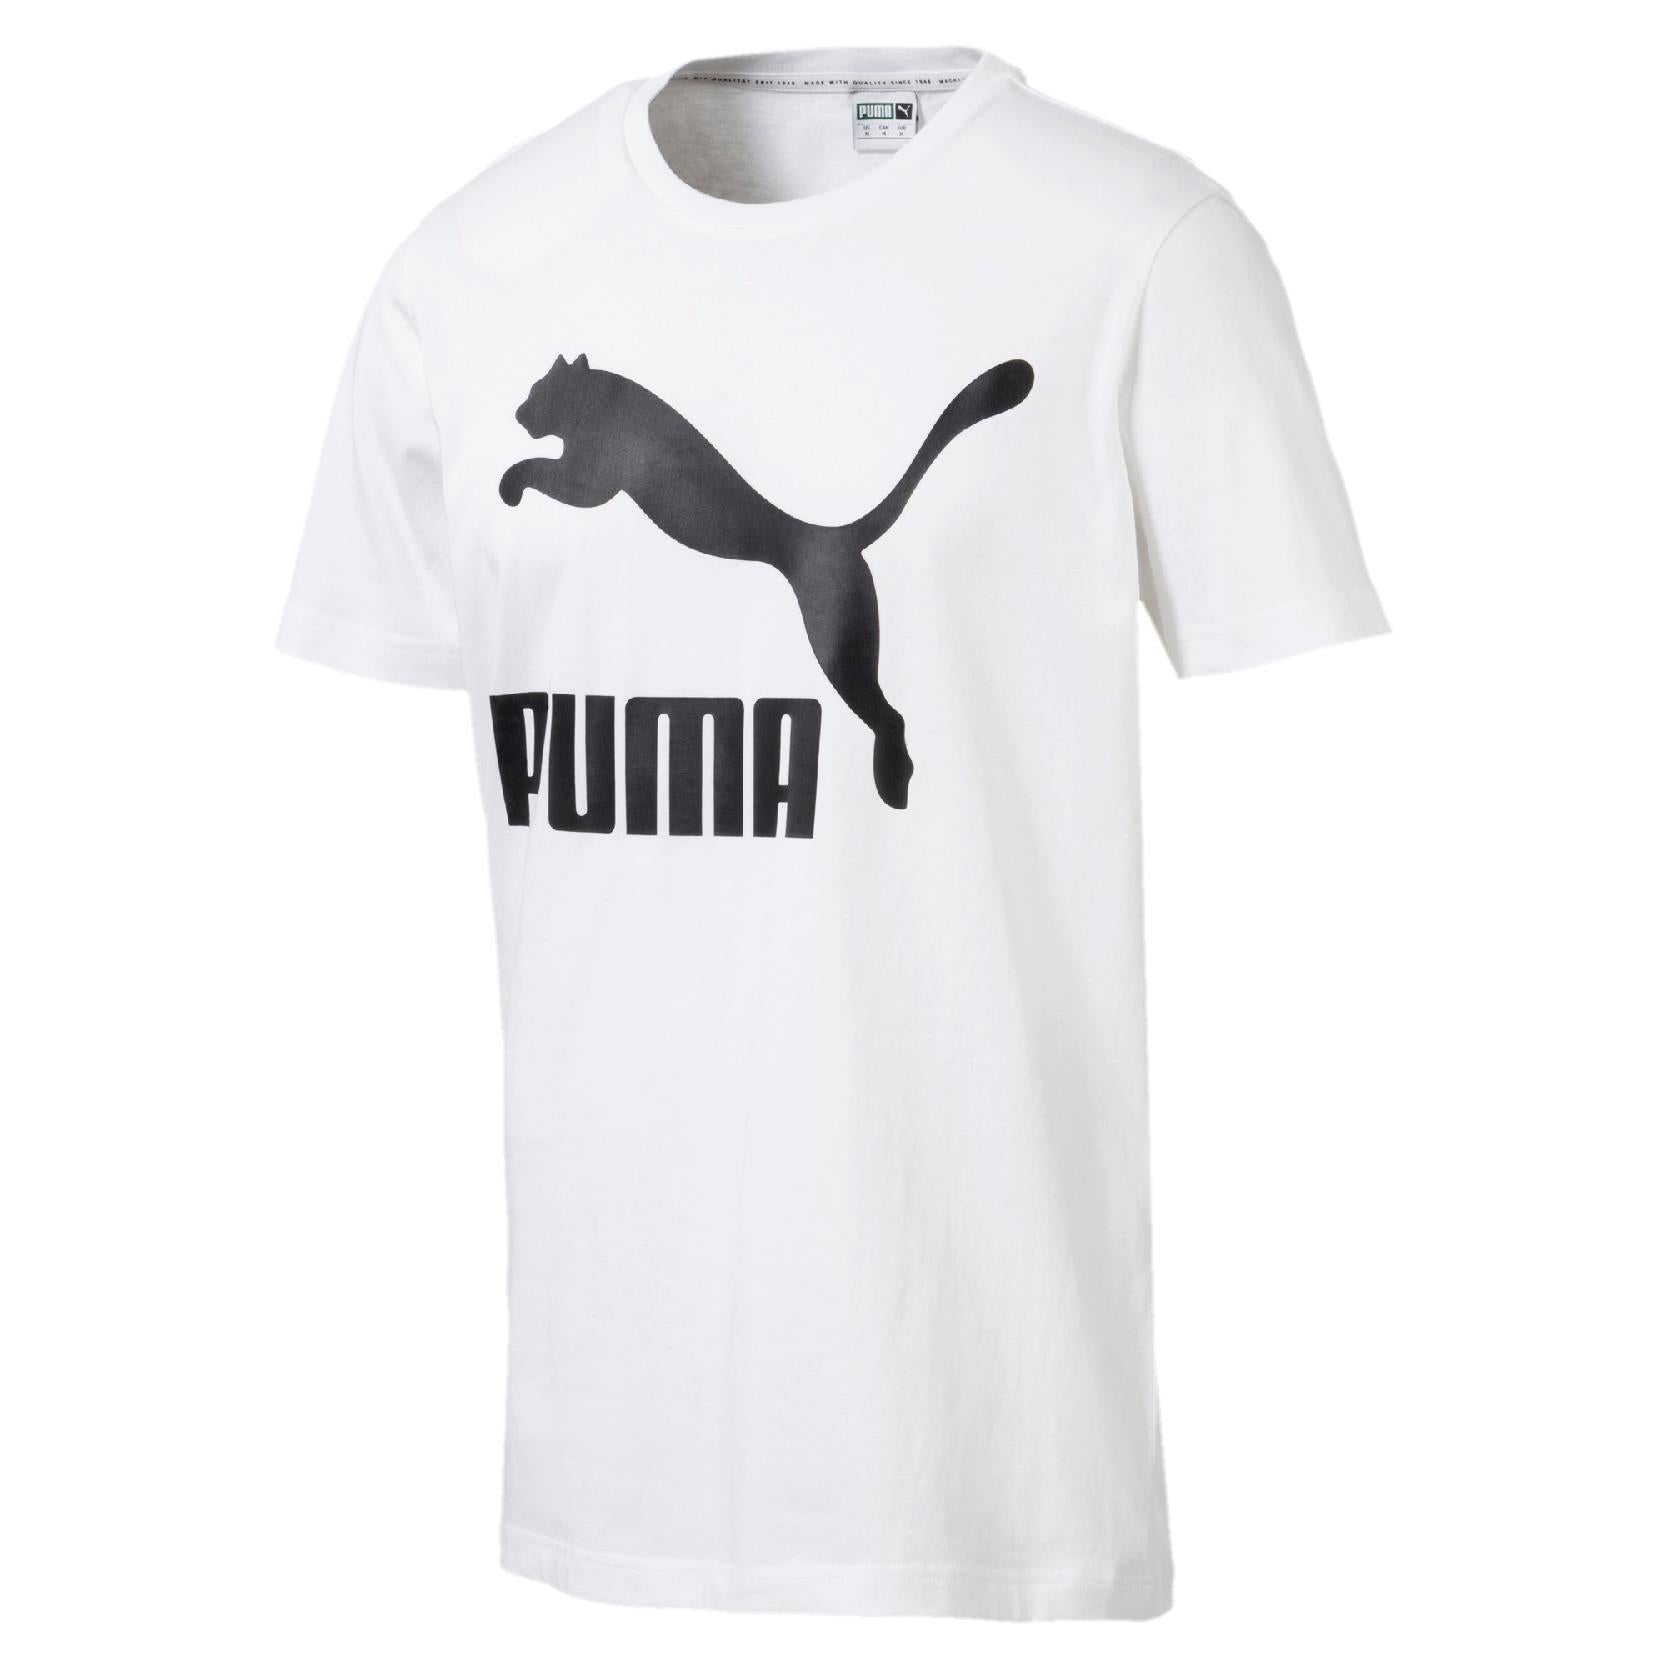 Puma T-shirt Homme